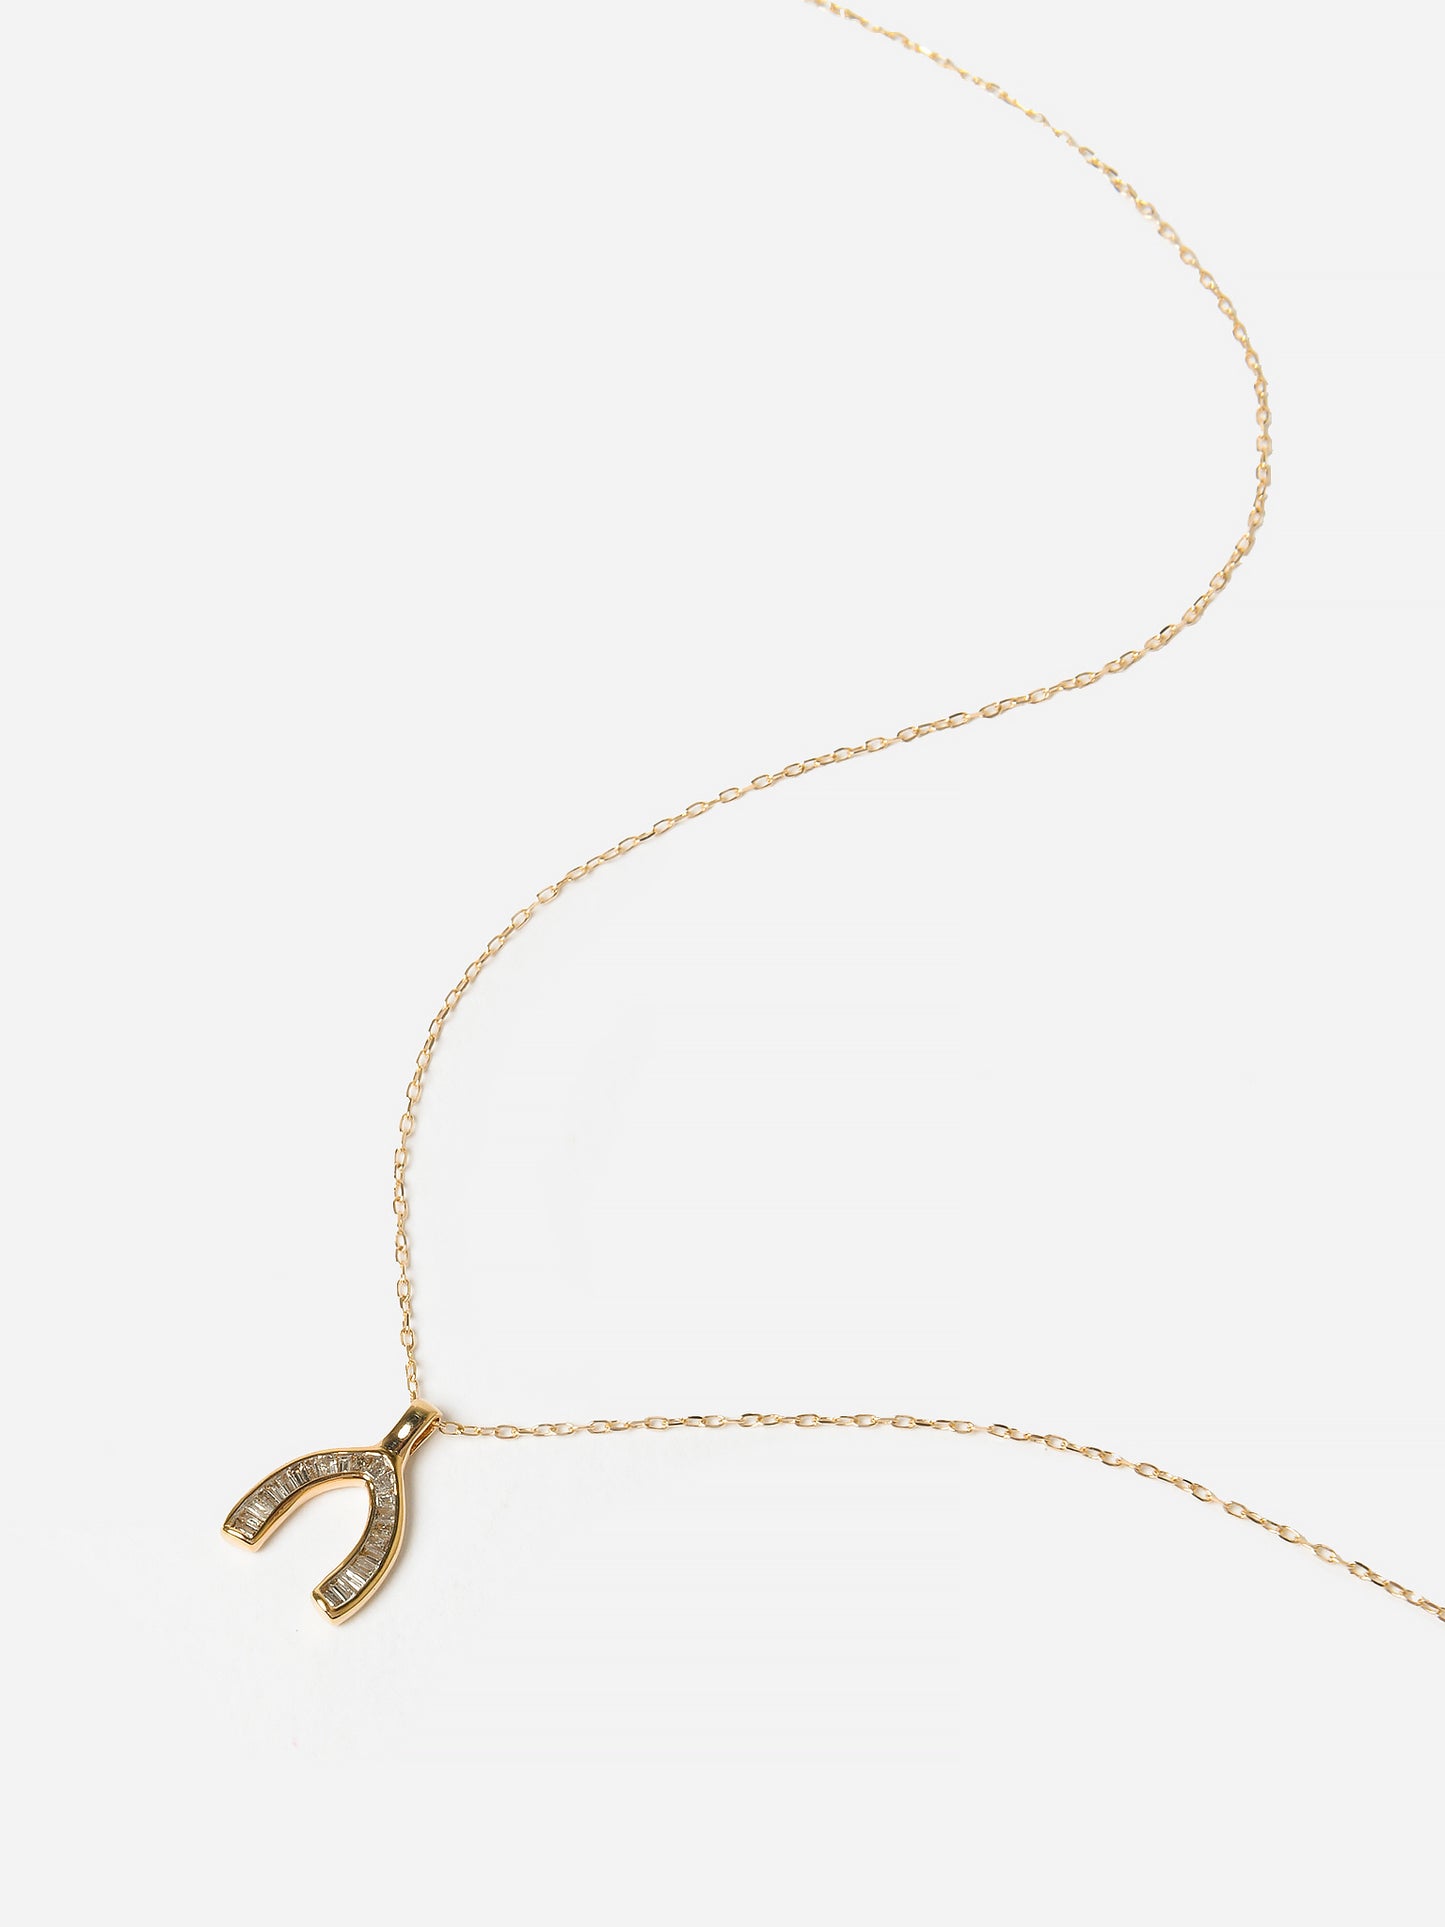 Adina Reyter Women's Baguette Wishbone Necklace